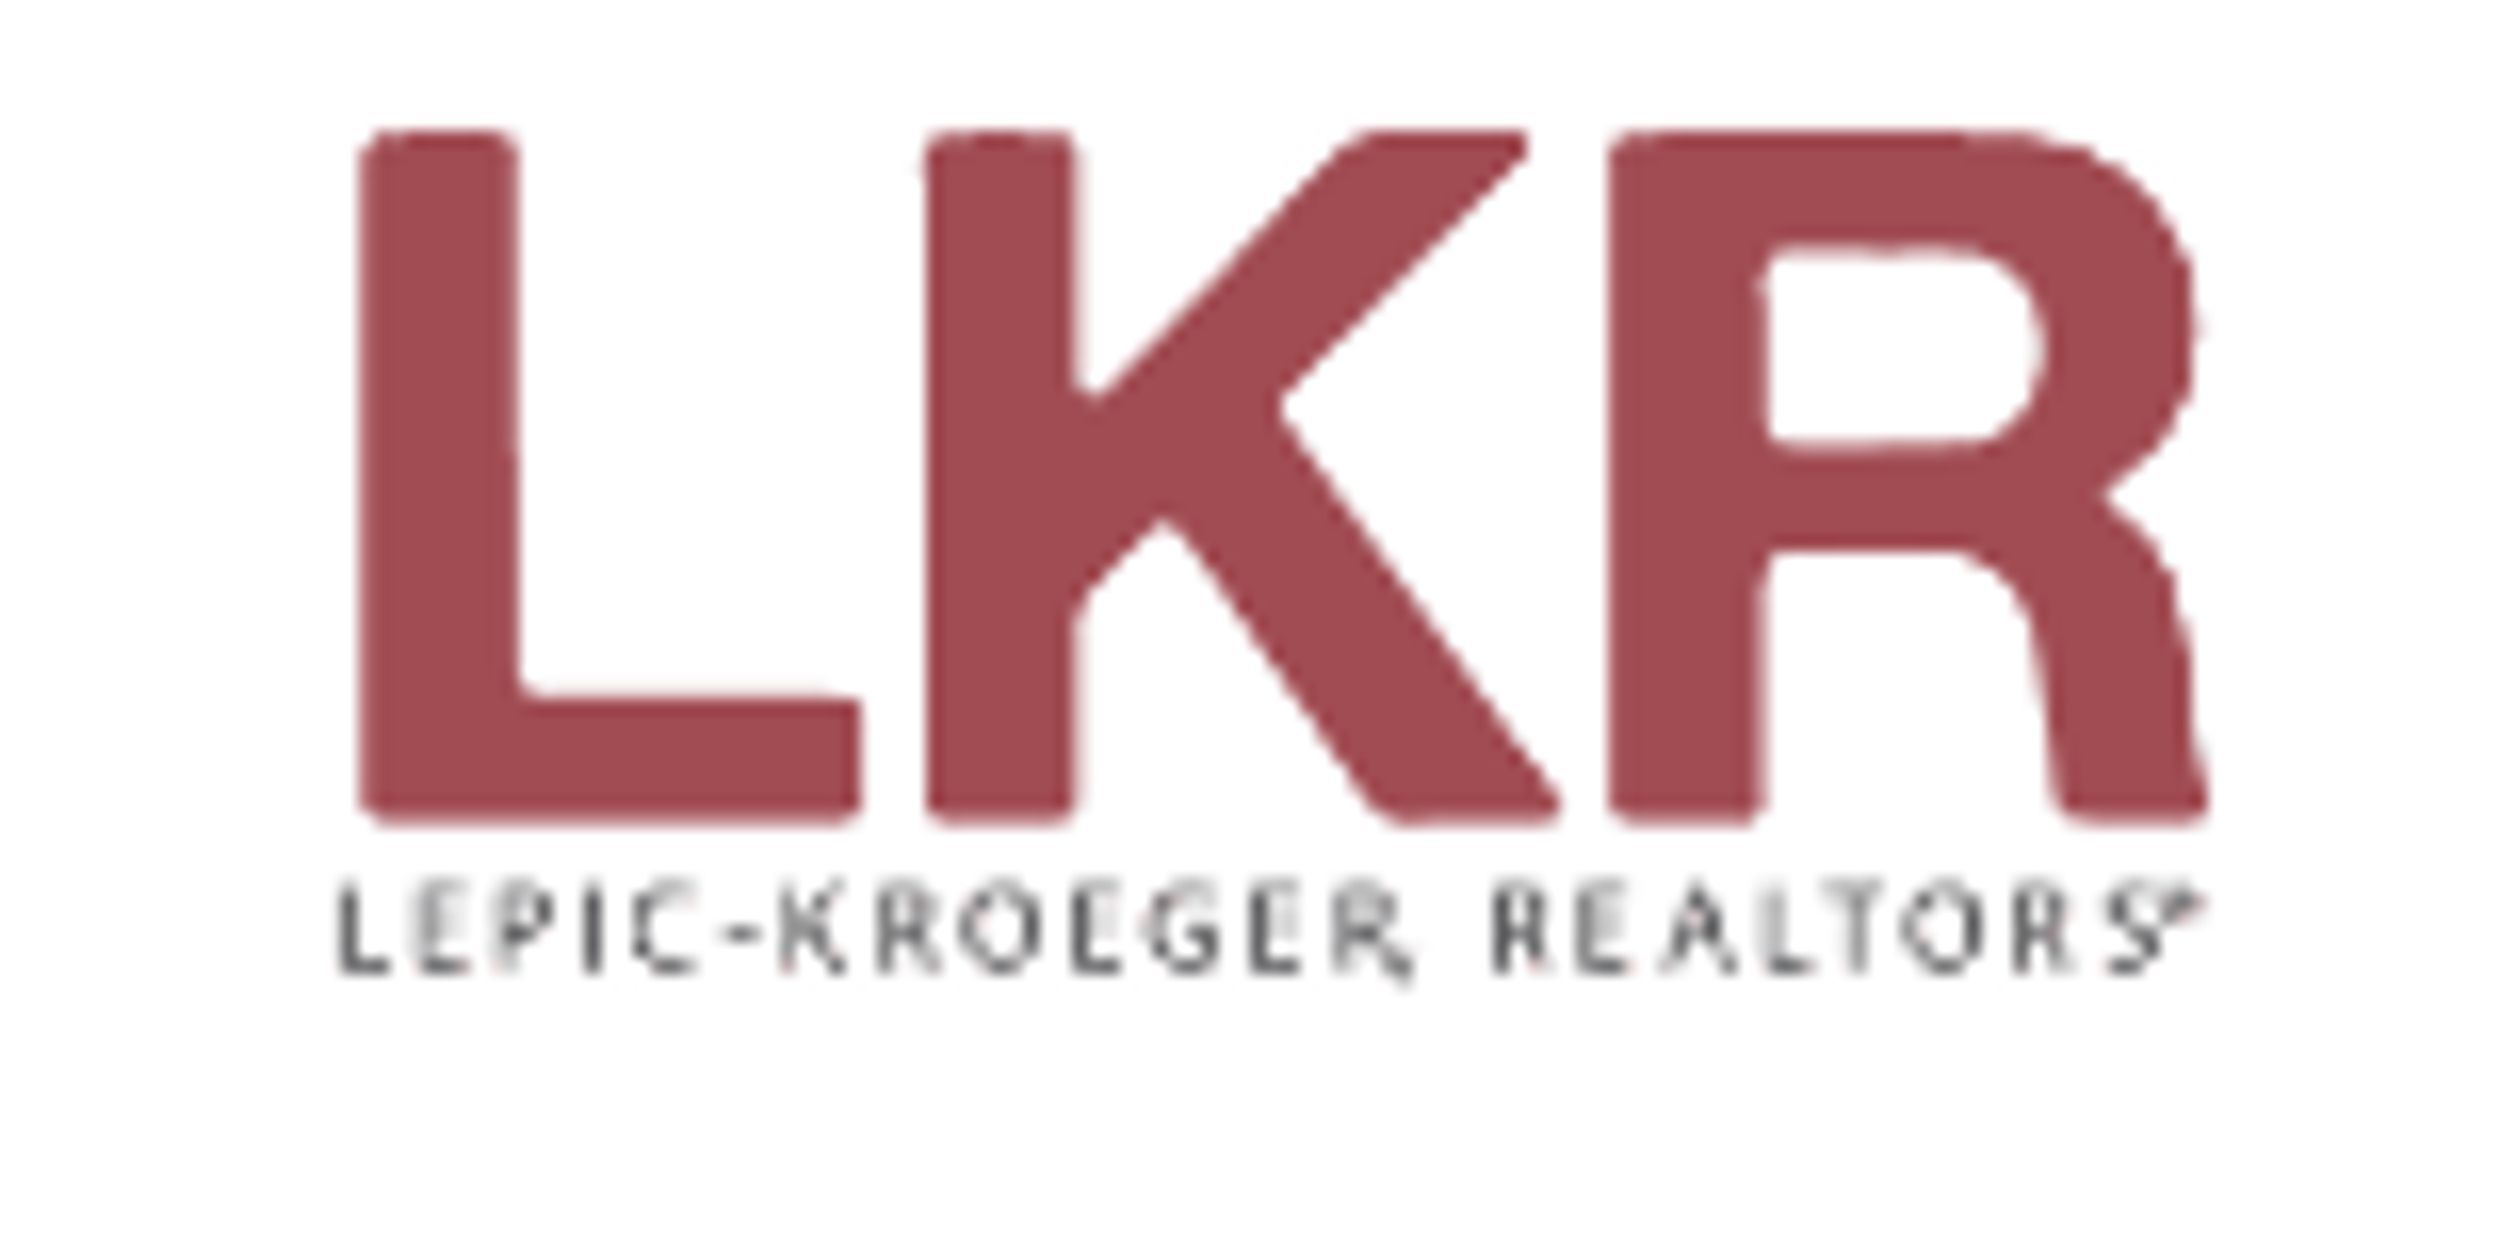 Lepic - Kroeger Realtors Profile Picture